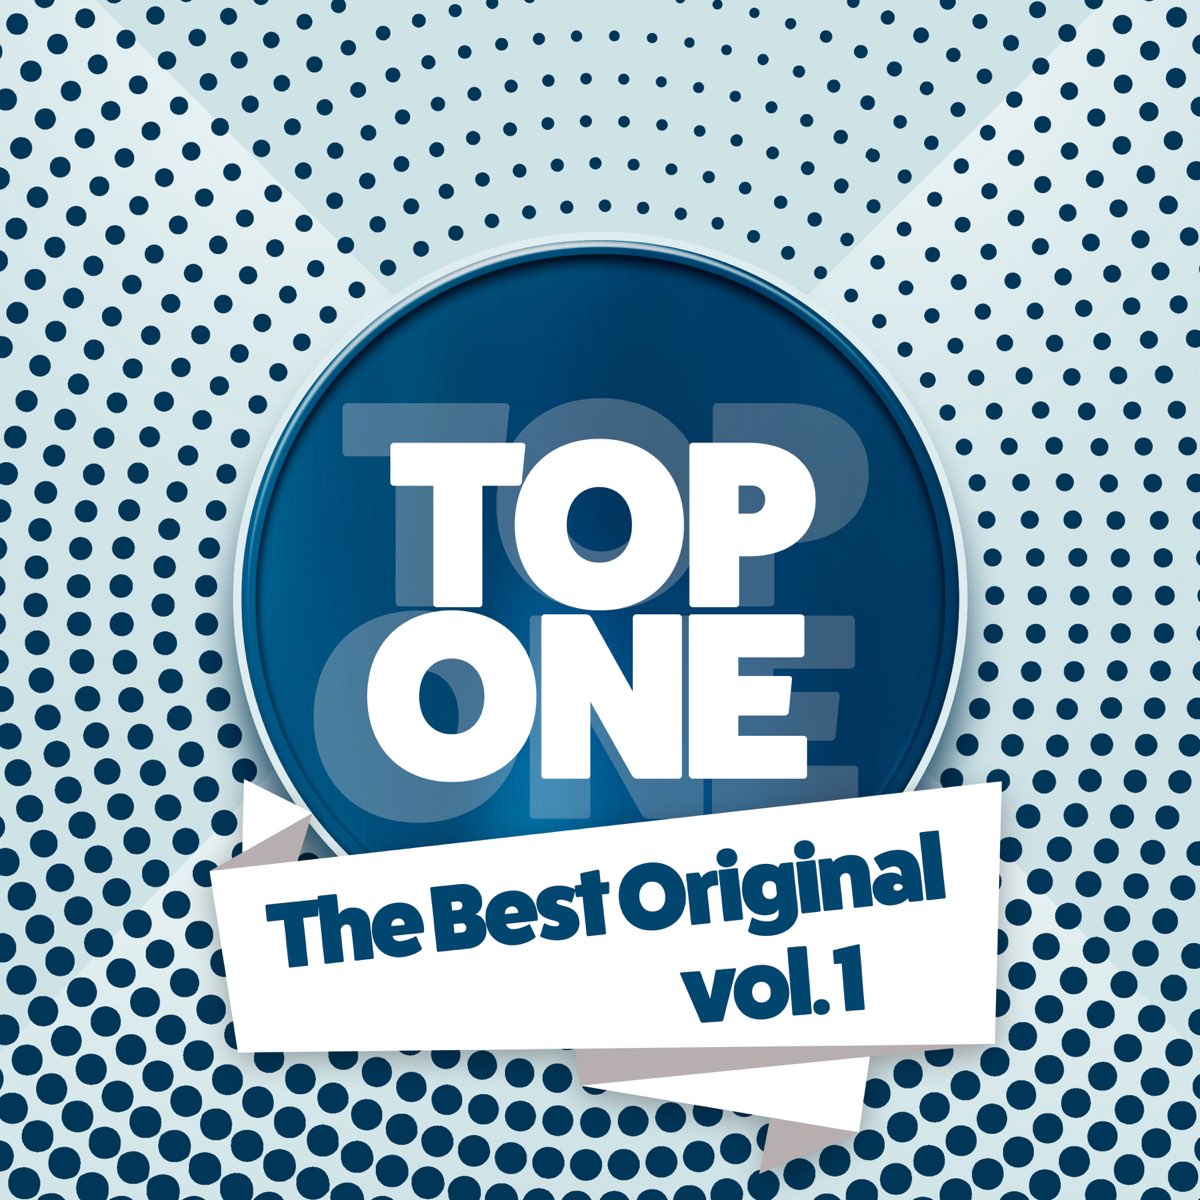 ‎The Best Original, Vol. 1 - Album by Top One - Apple Music